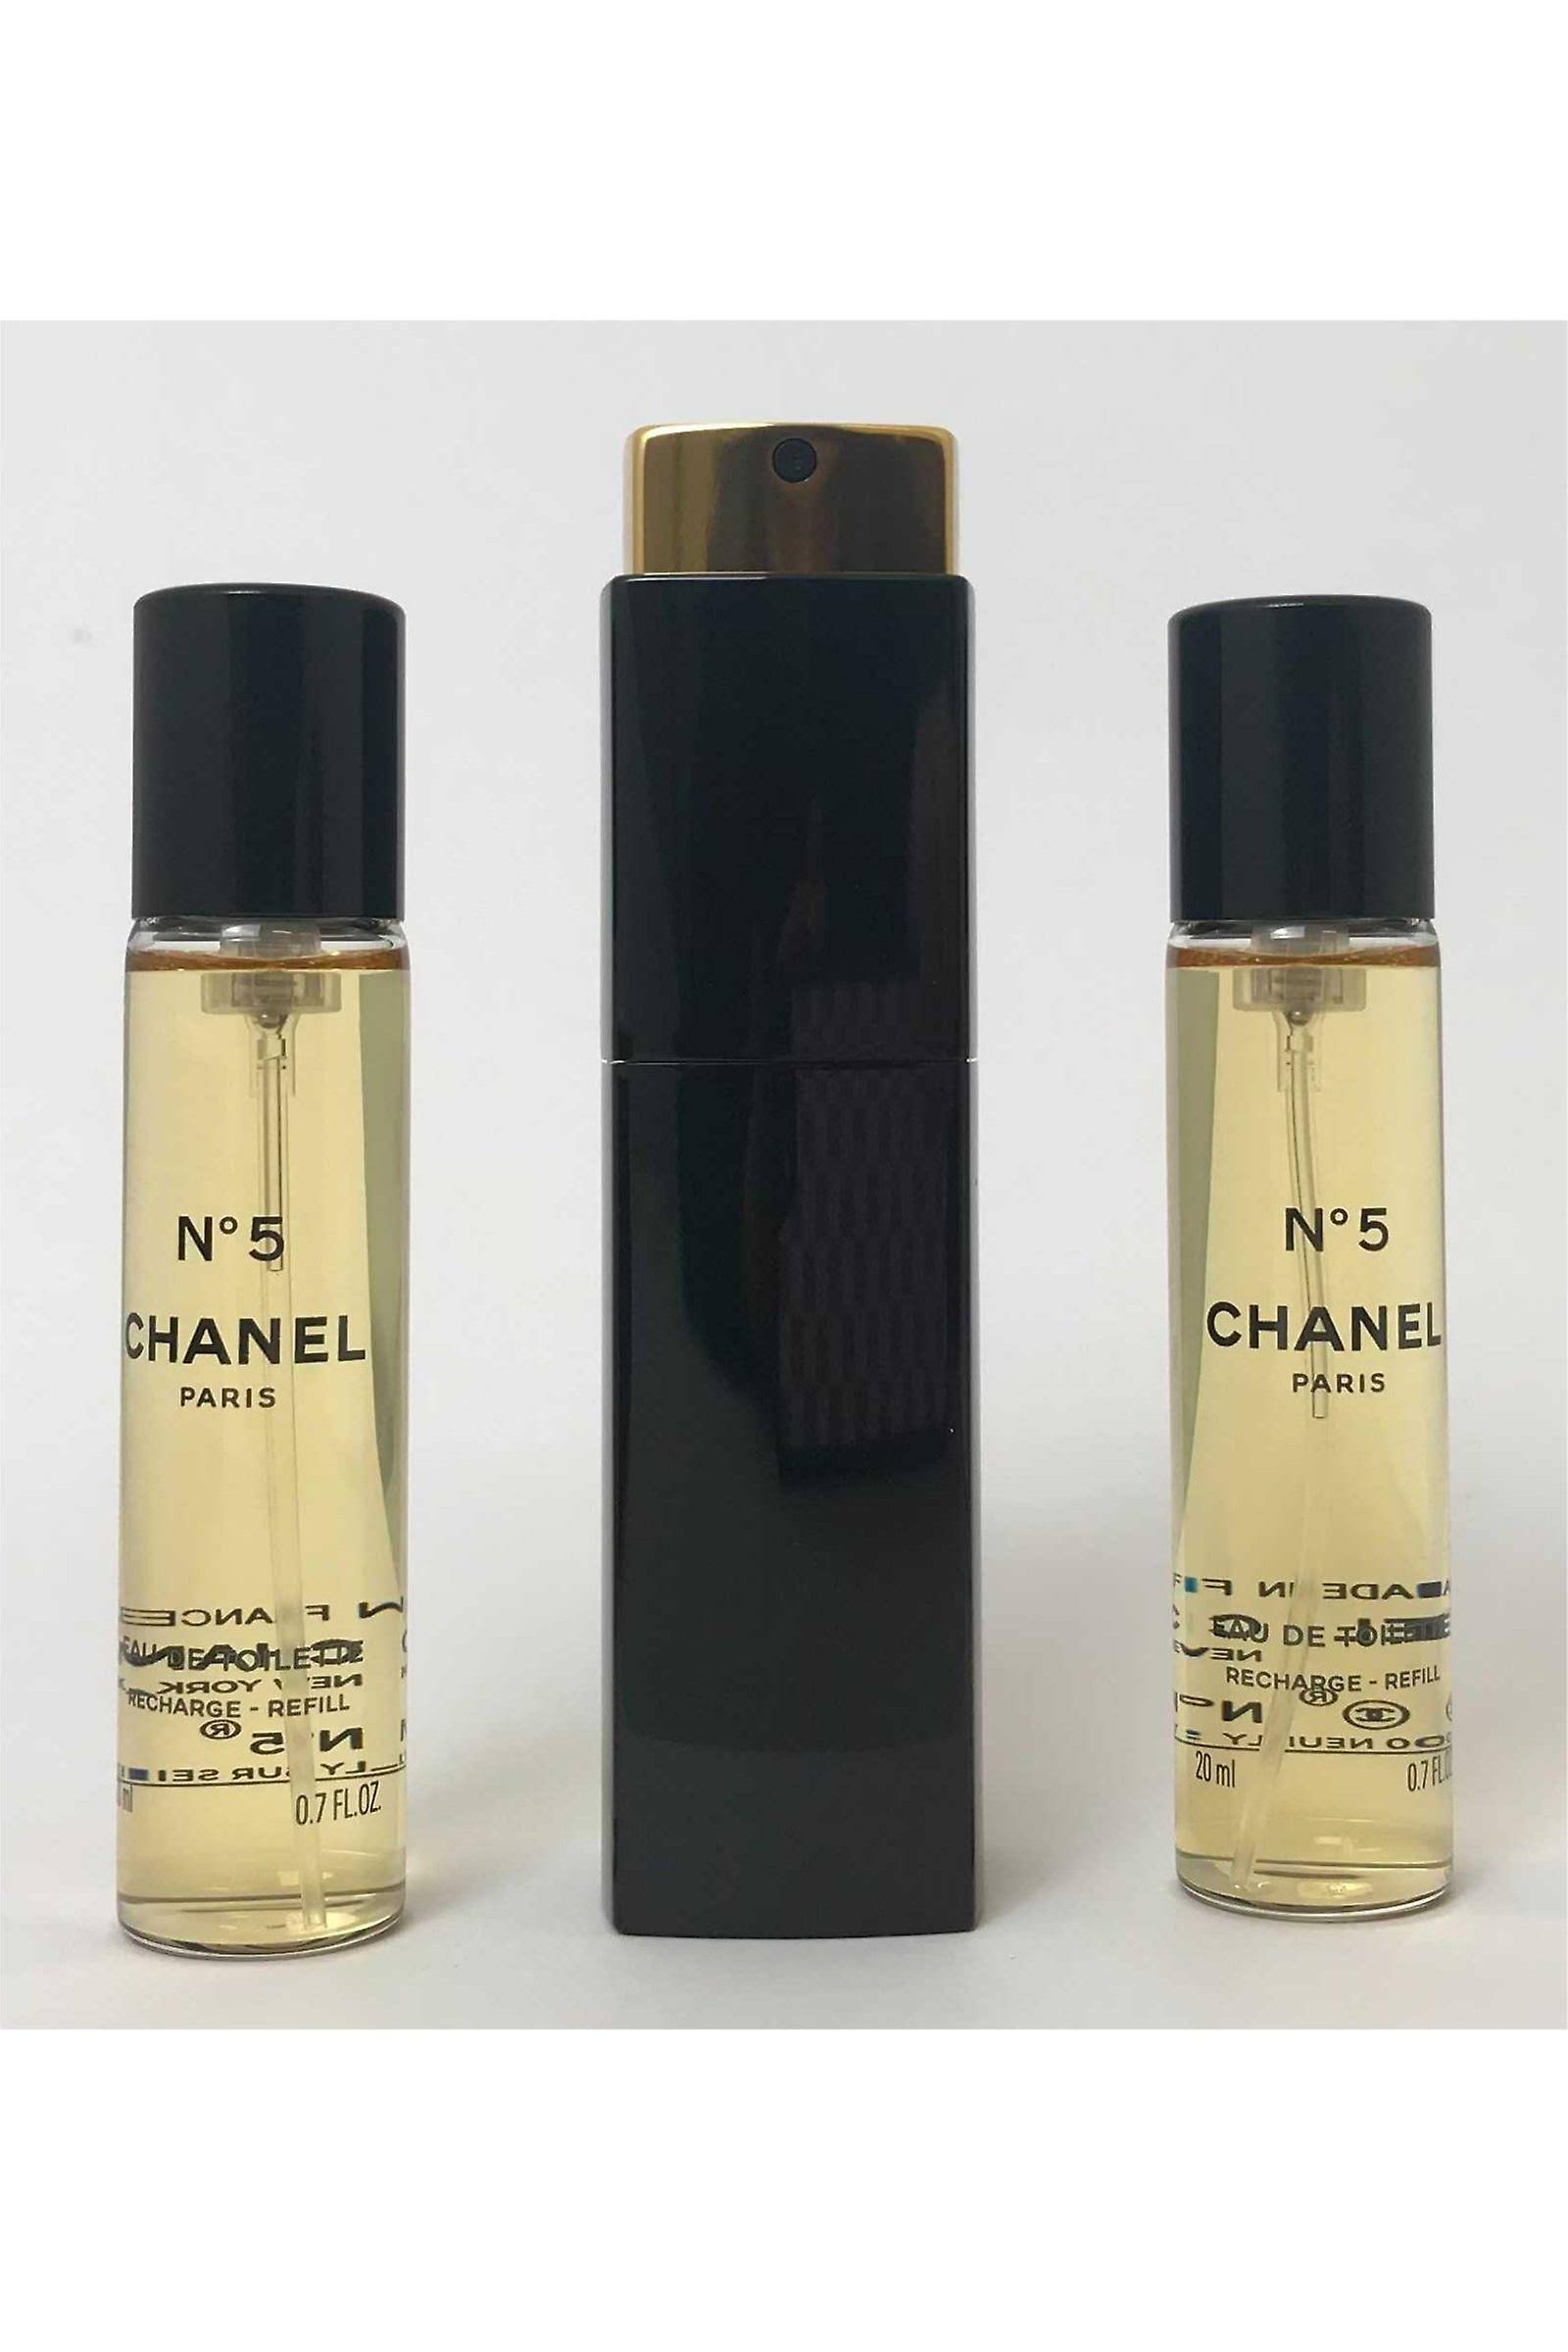 Chanel No.5 Eau De Toilette Purse Spray